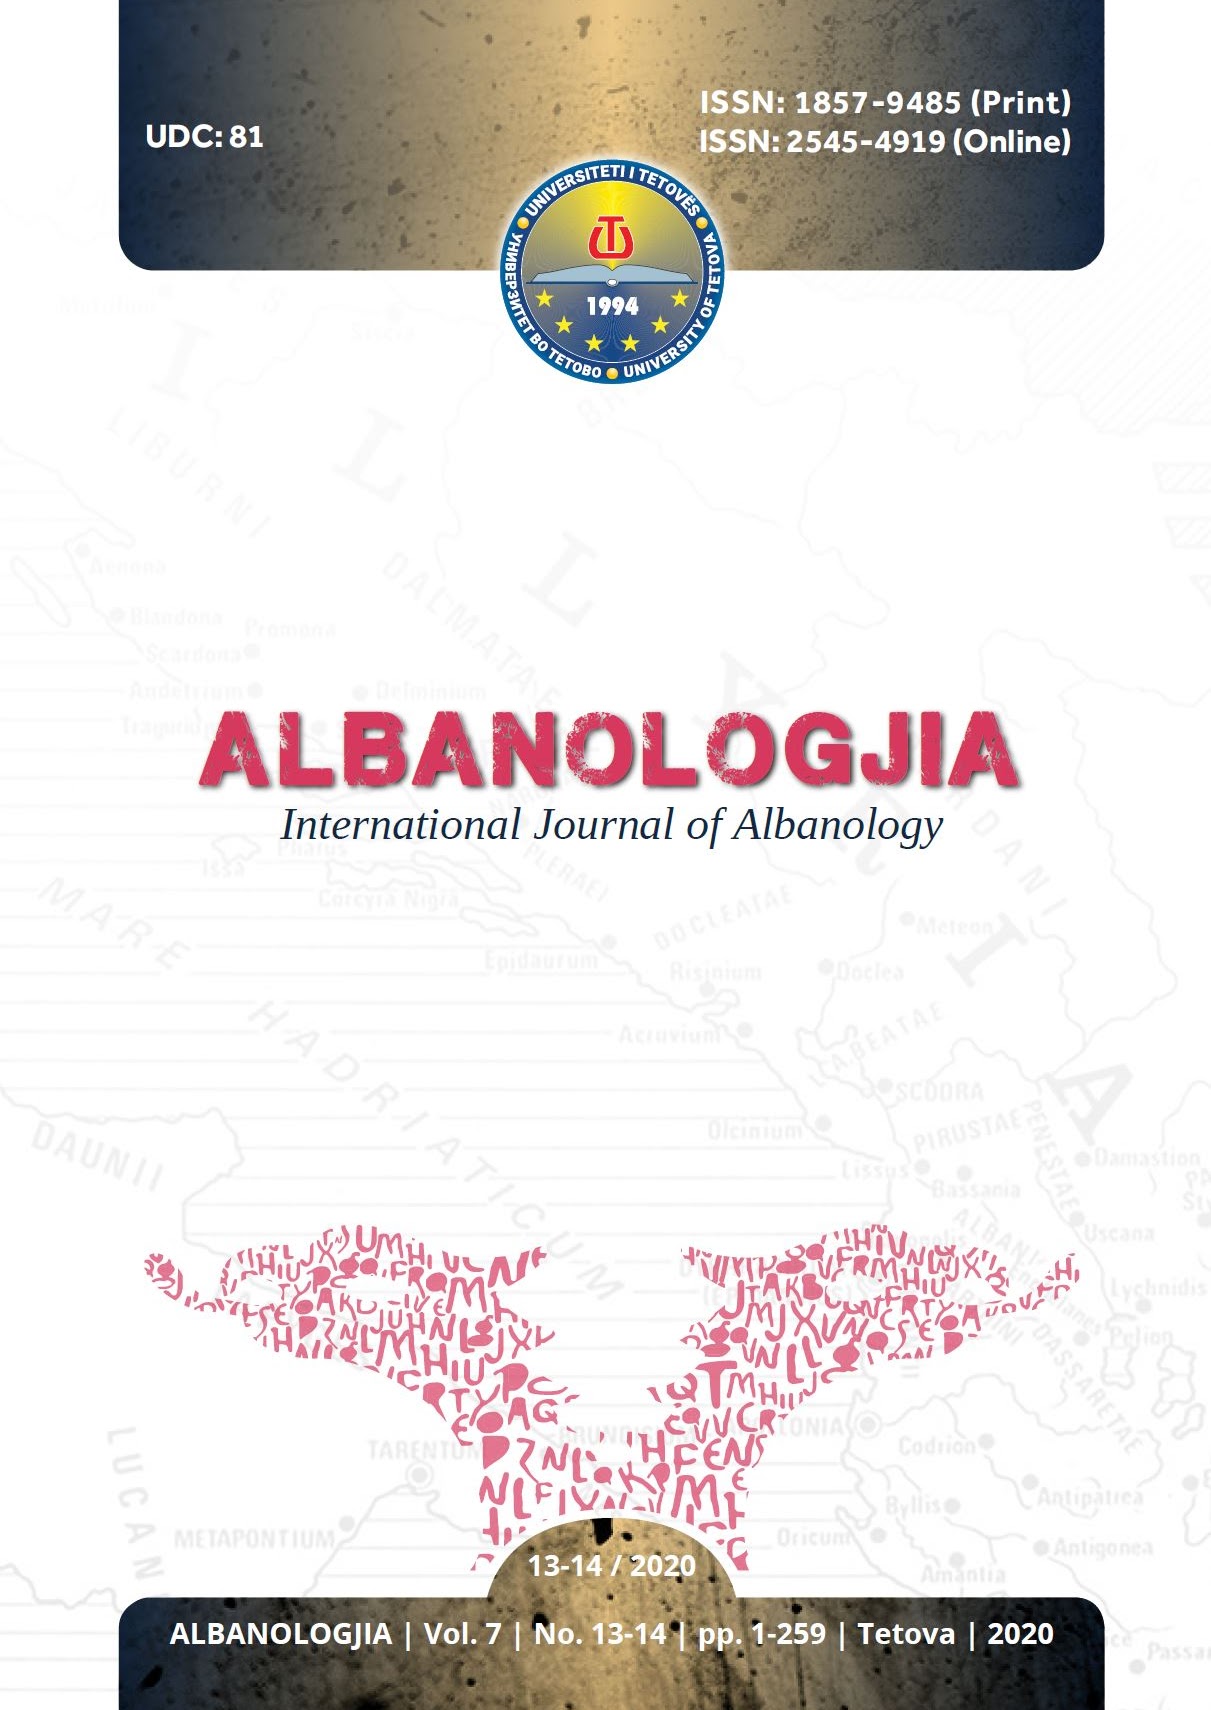 GJEKË MARINAJ: THE EXCELLENT POET OF THE ALBANIAN DIASPORA IN AMERICA Cover Image